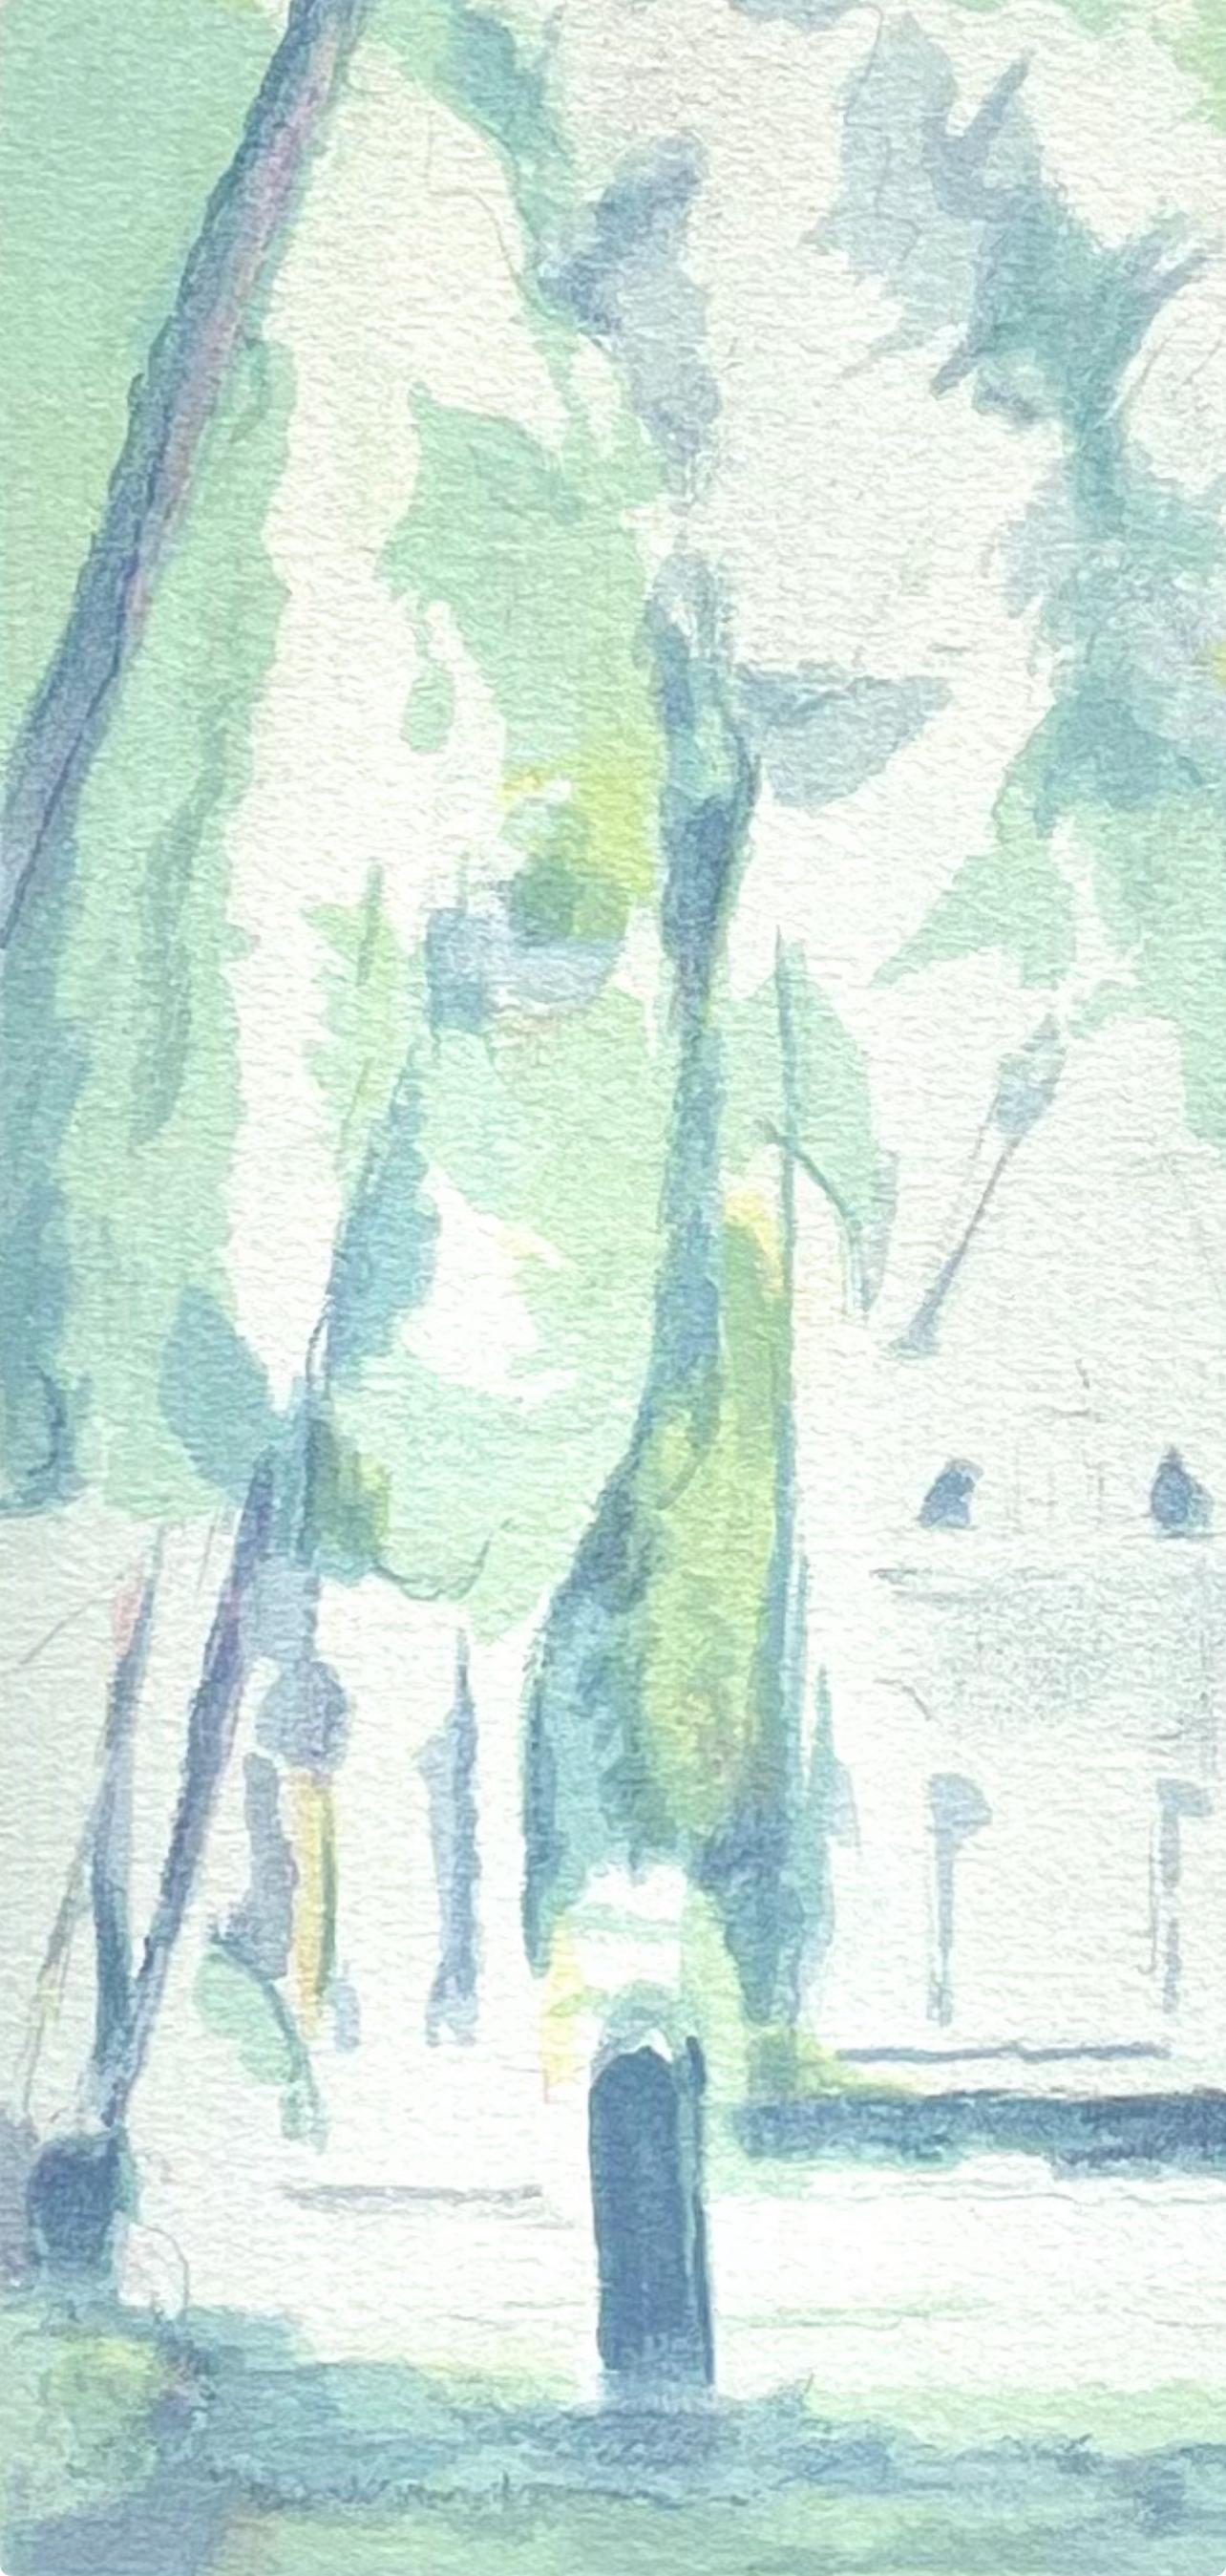 Cézanne, The Gate, Chantilly, Cézanne: Ten Water Colors (after) - Modern Print by Paul Cézanne